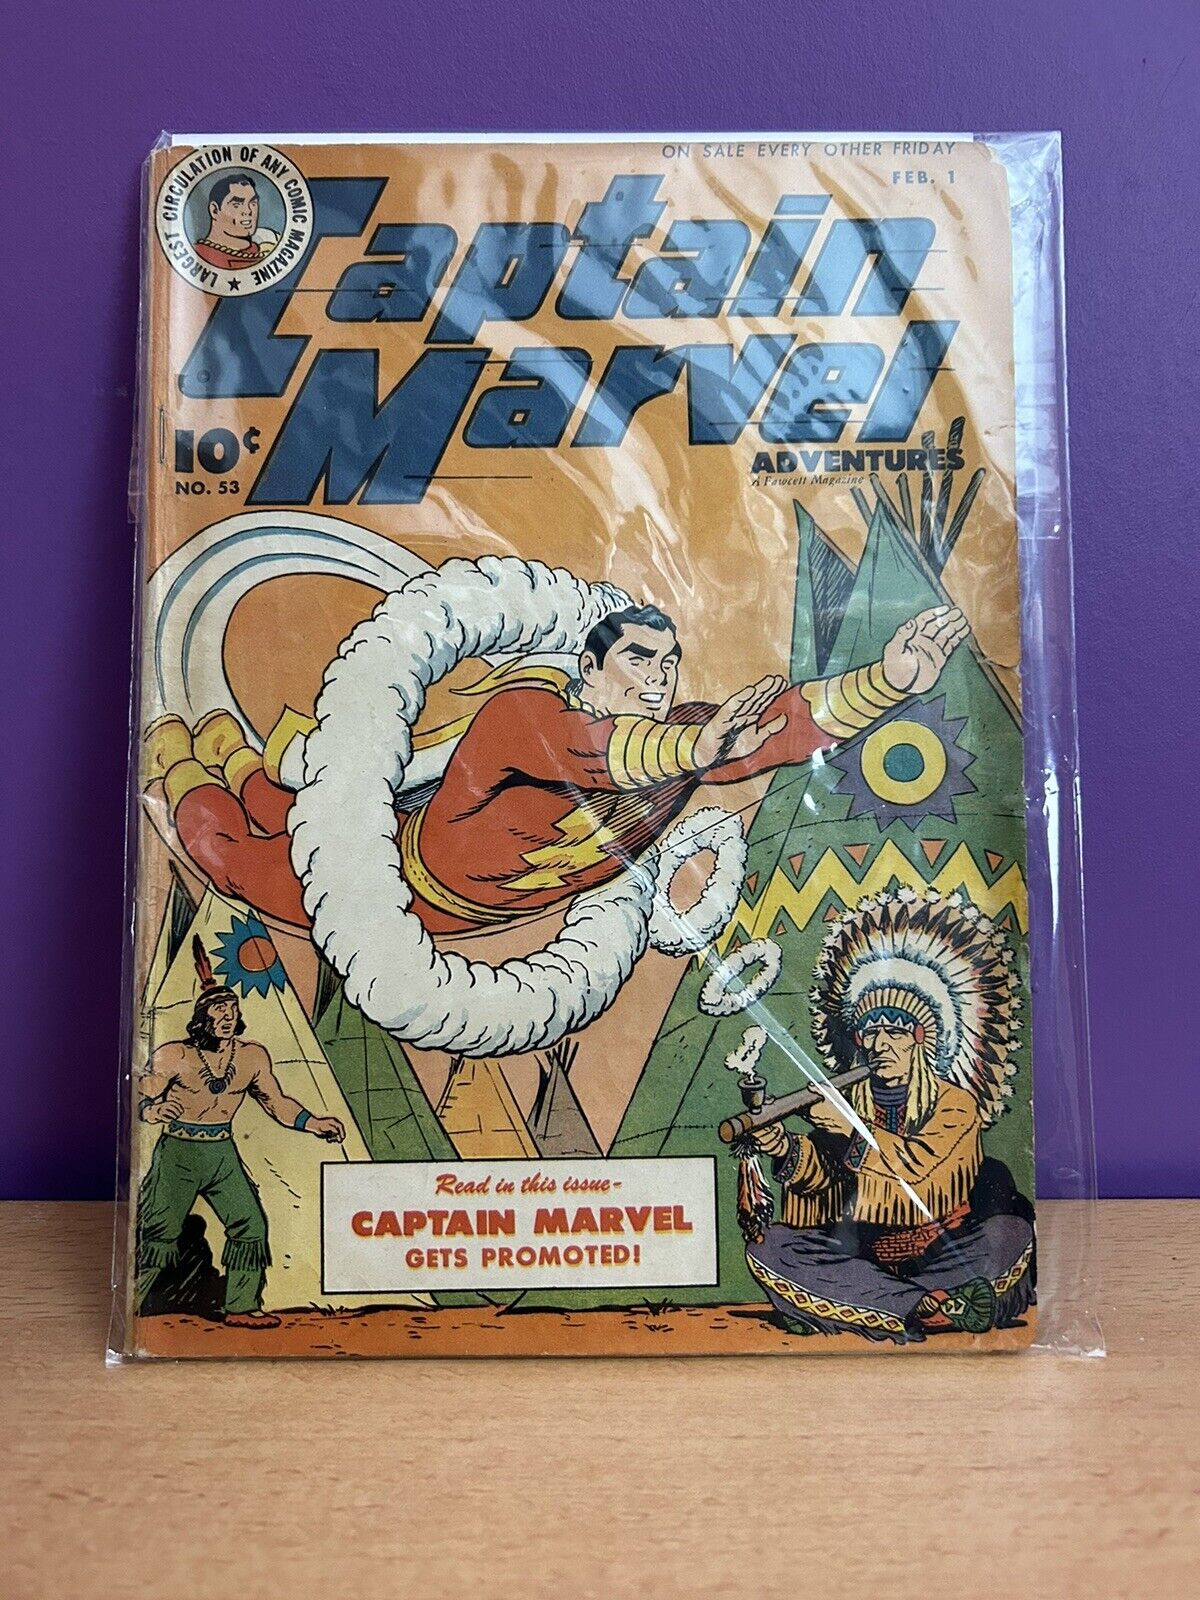 Captain Marvel Adventures #53 - Golden Age Fawcett Comics 1946